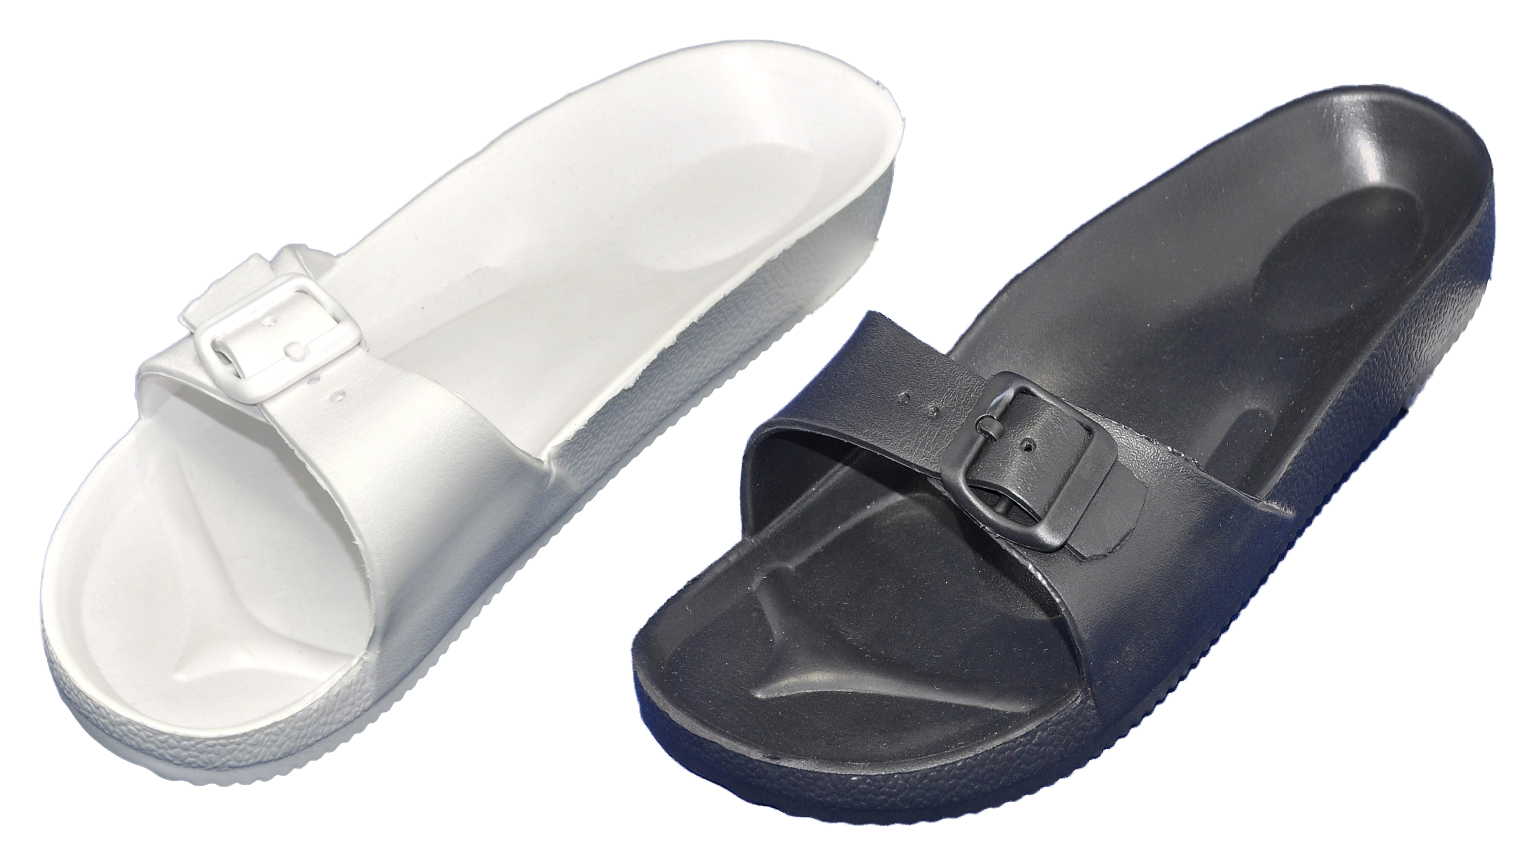 wholesale slide sandals